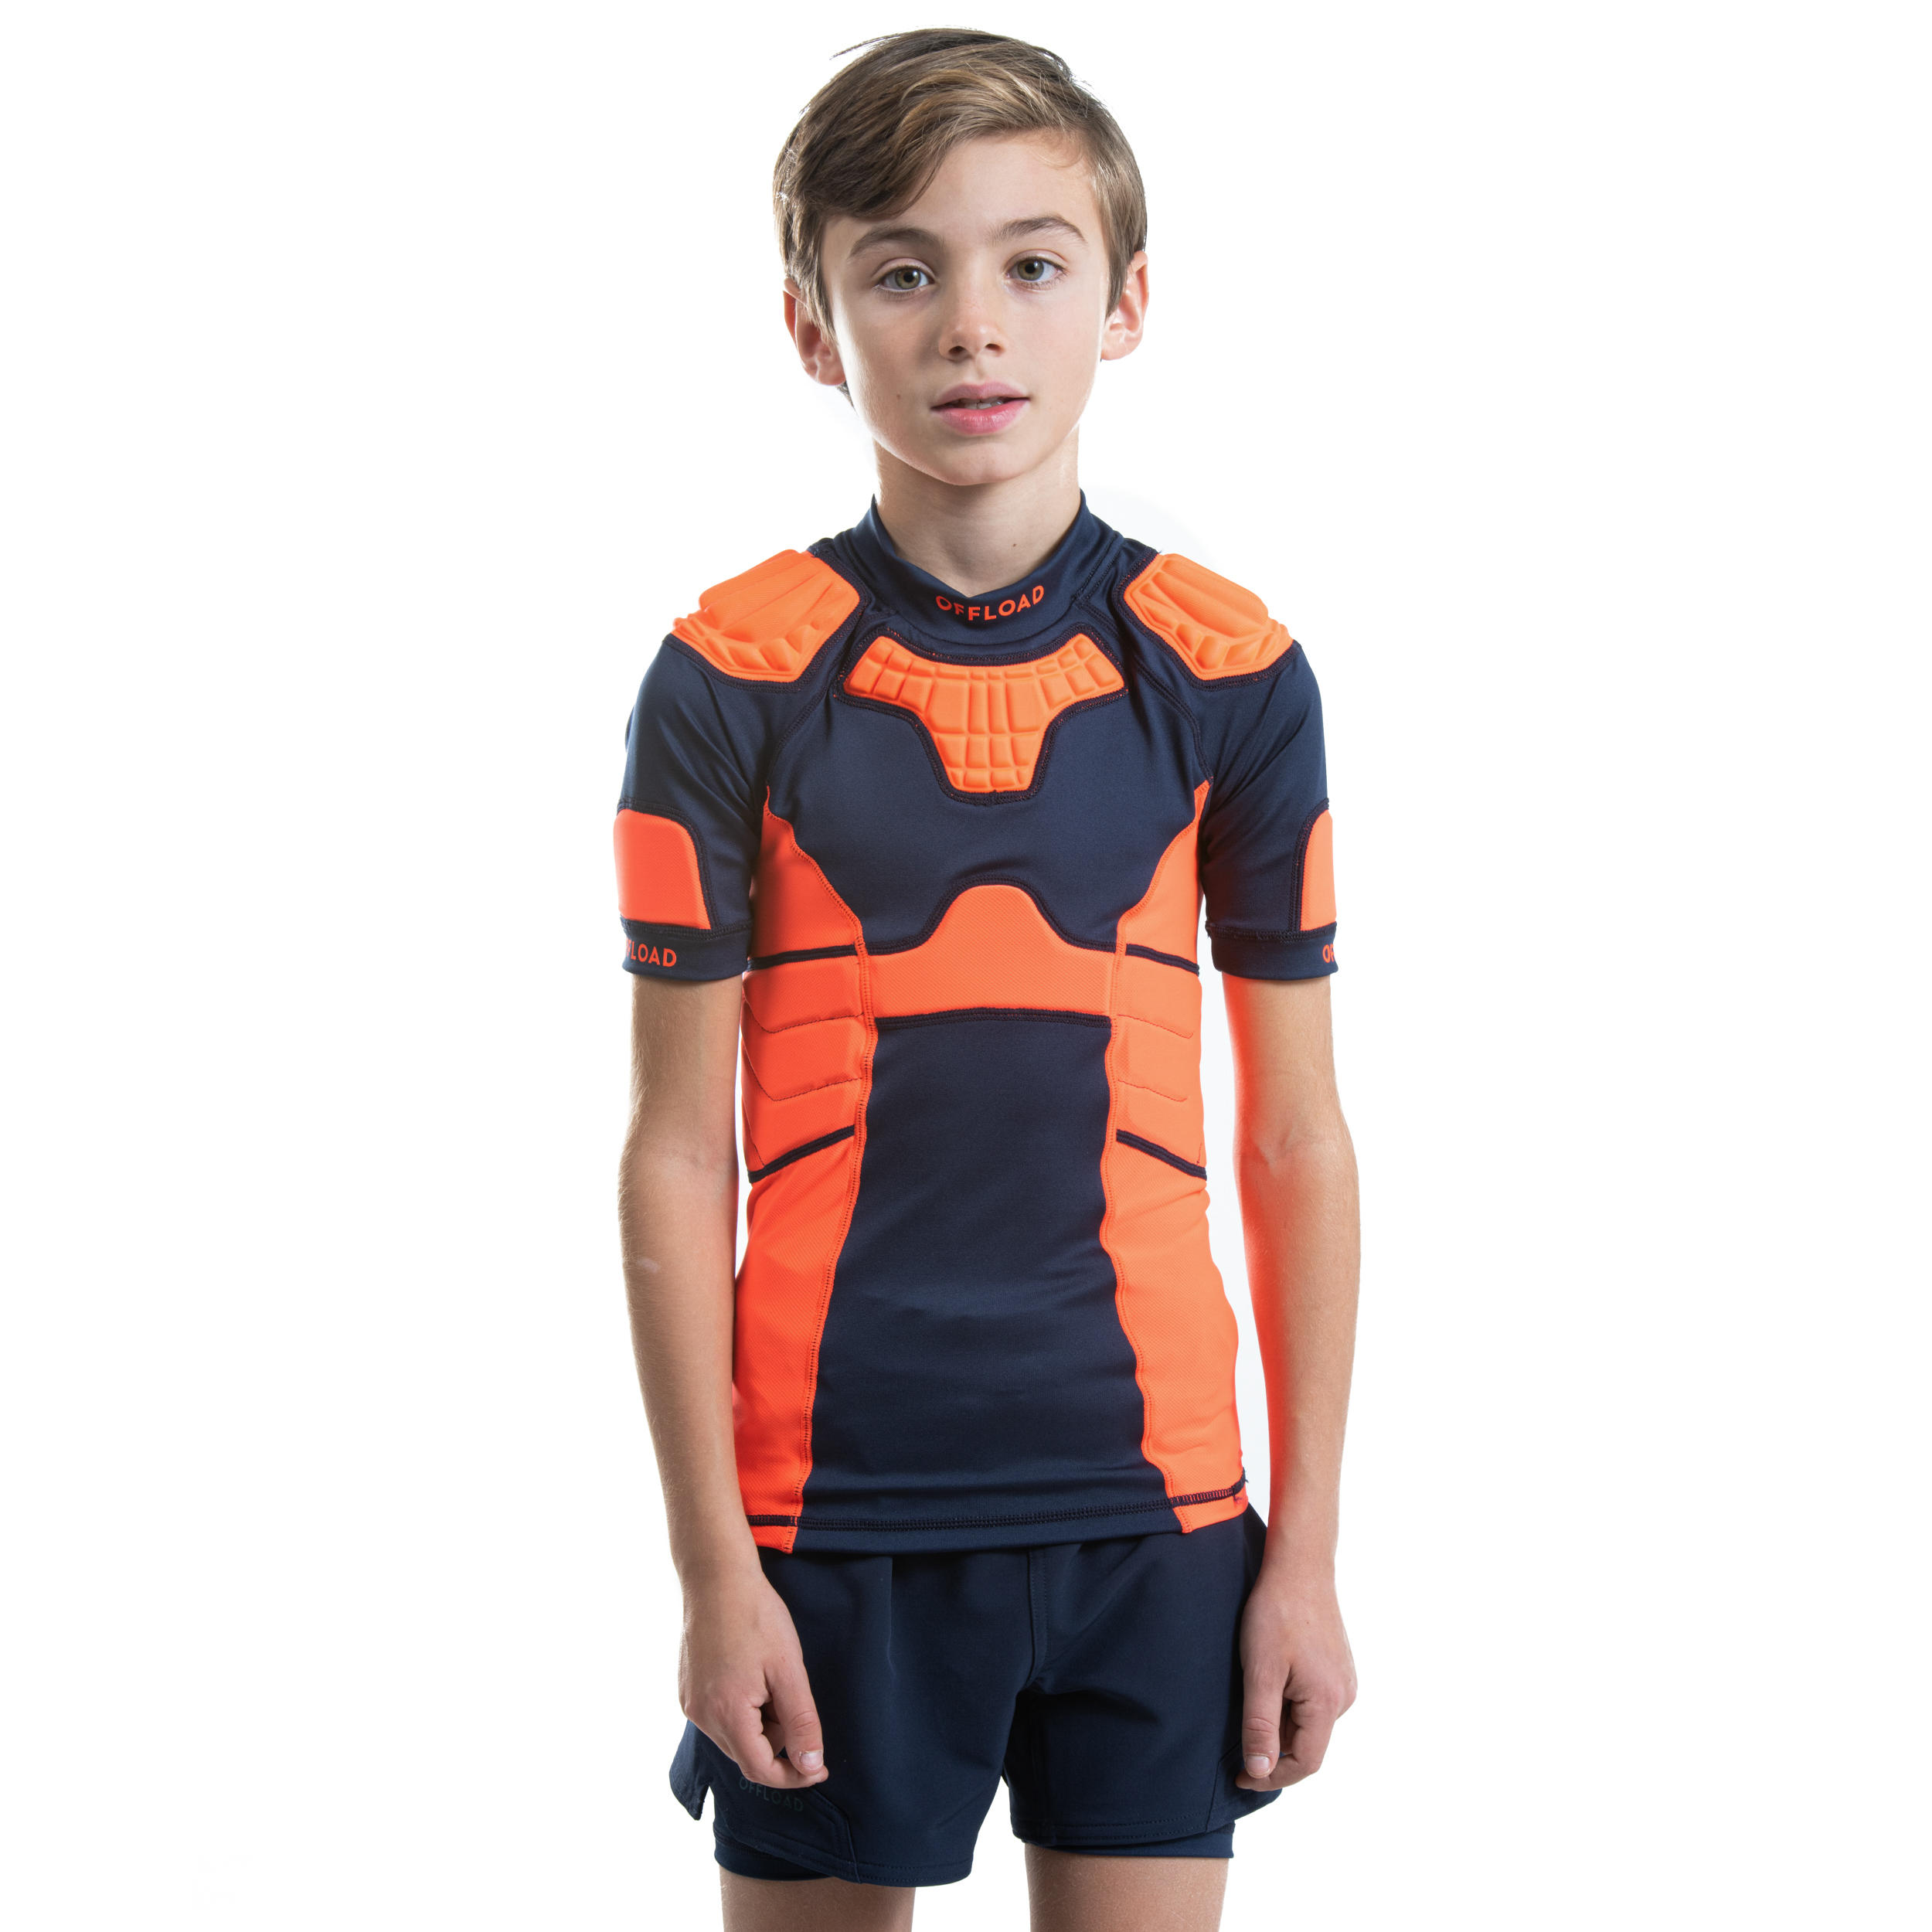 Kids' Rugby Shoulder Pad R500 - Orange 12/13